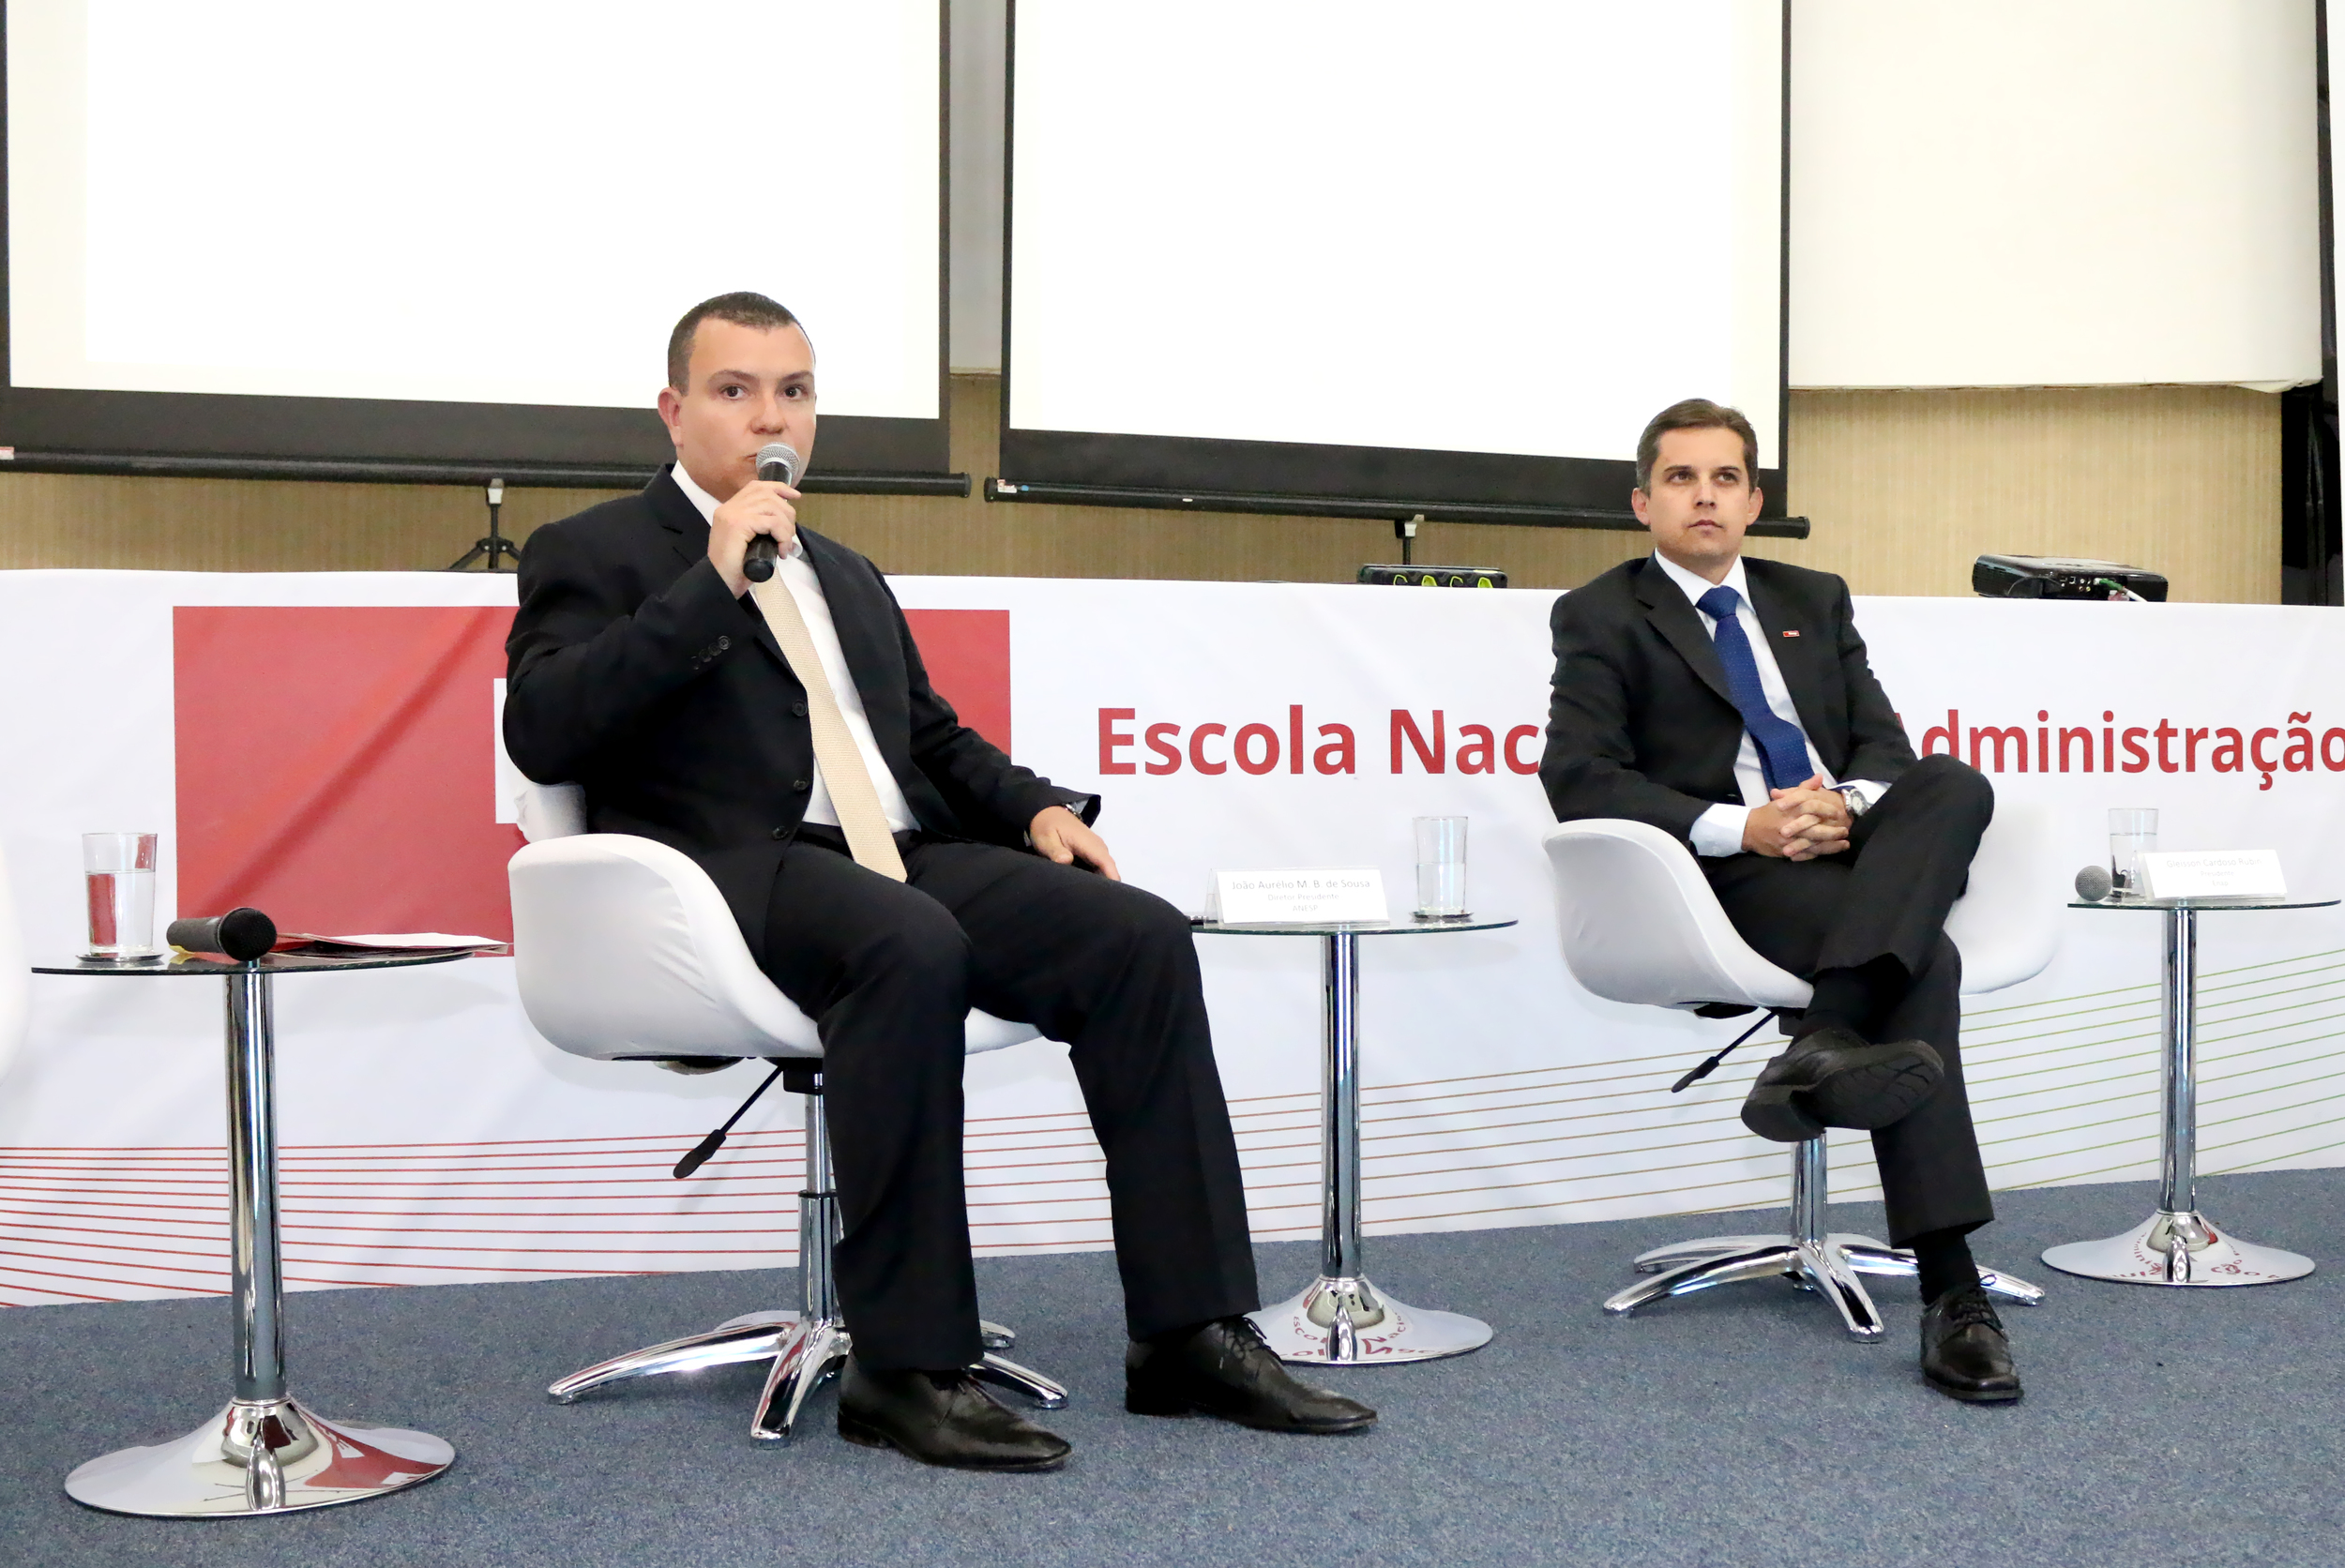 João Aurélio e Gleisson Rubin, Presidentes da ANESP e da ENAP, respectivamente.